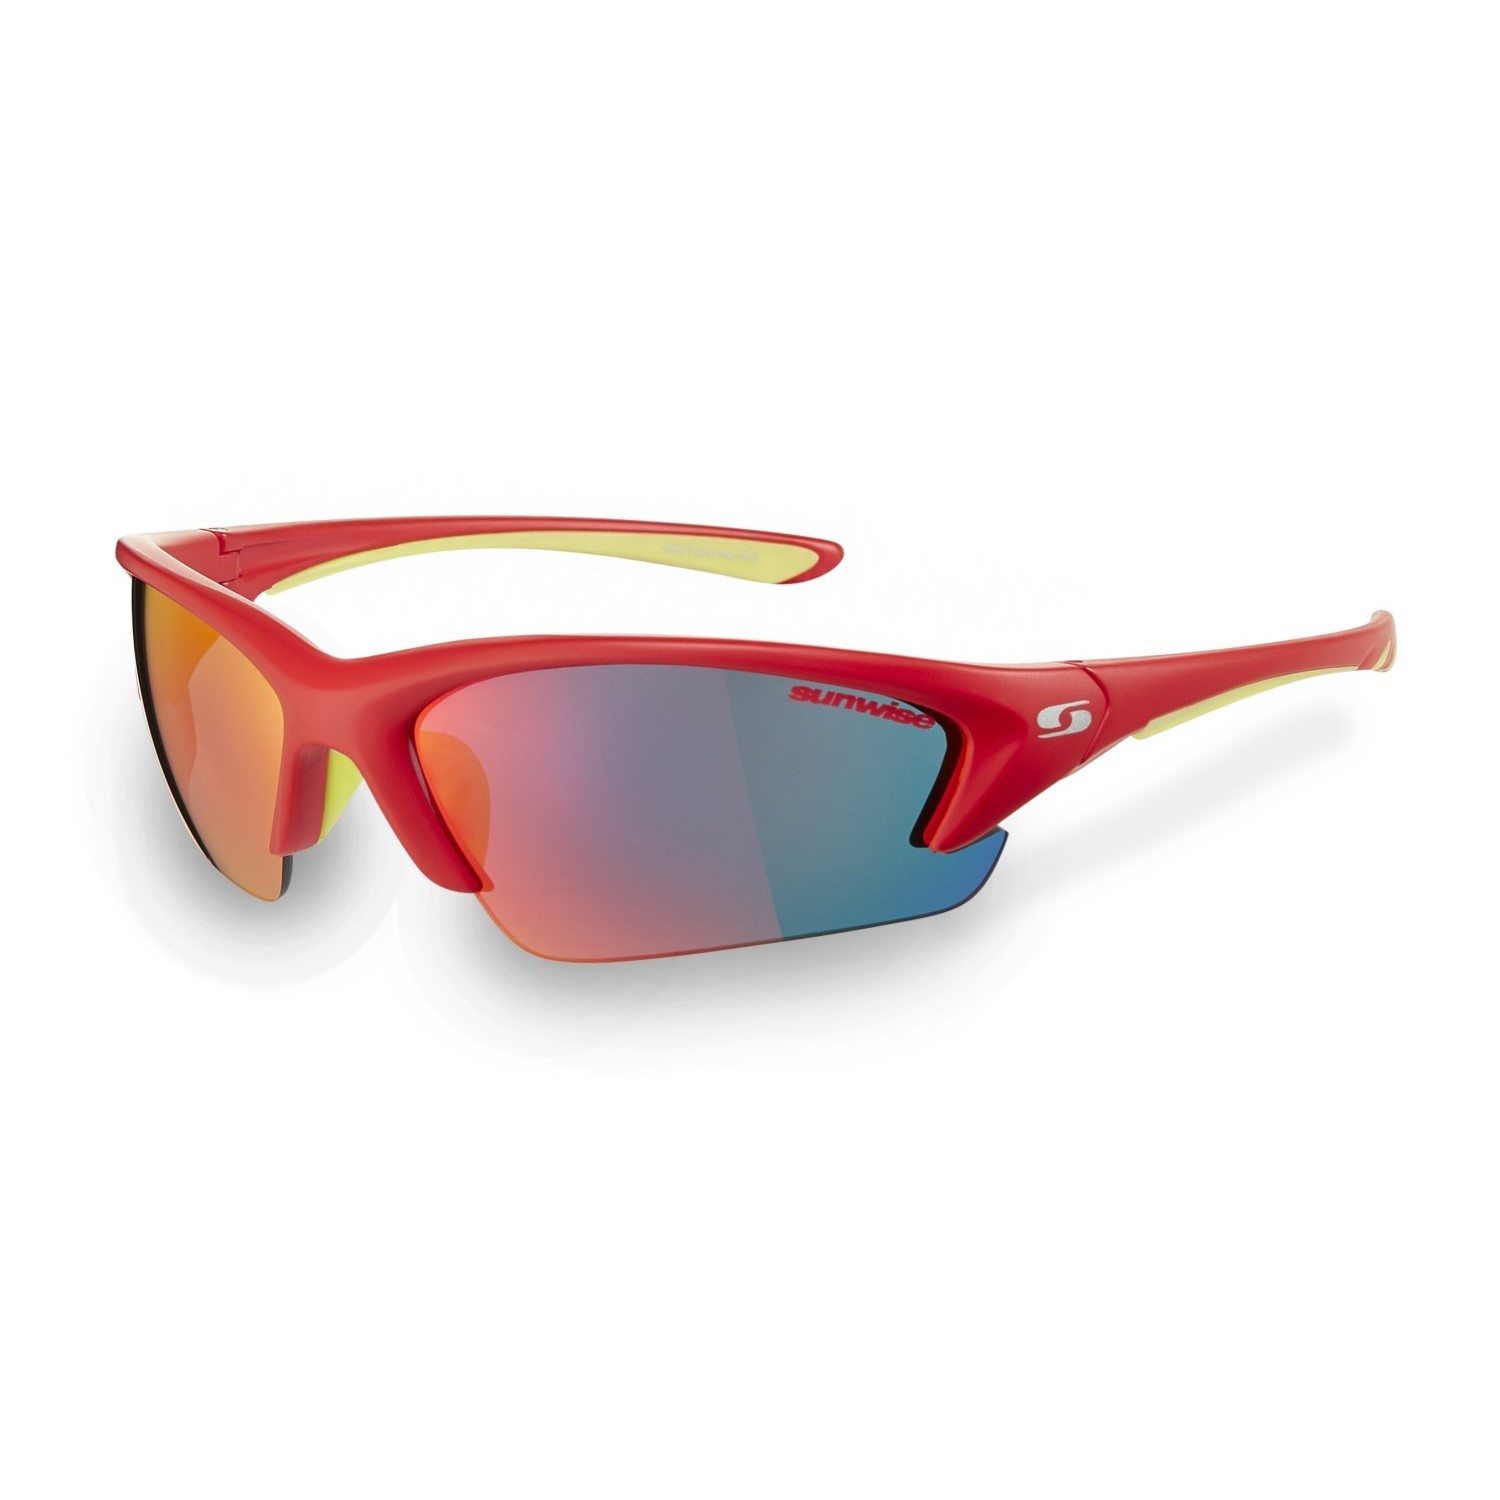 Sunwise Equinox Sports Sunglasses + 3 Lens Sets - Red